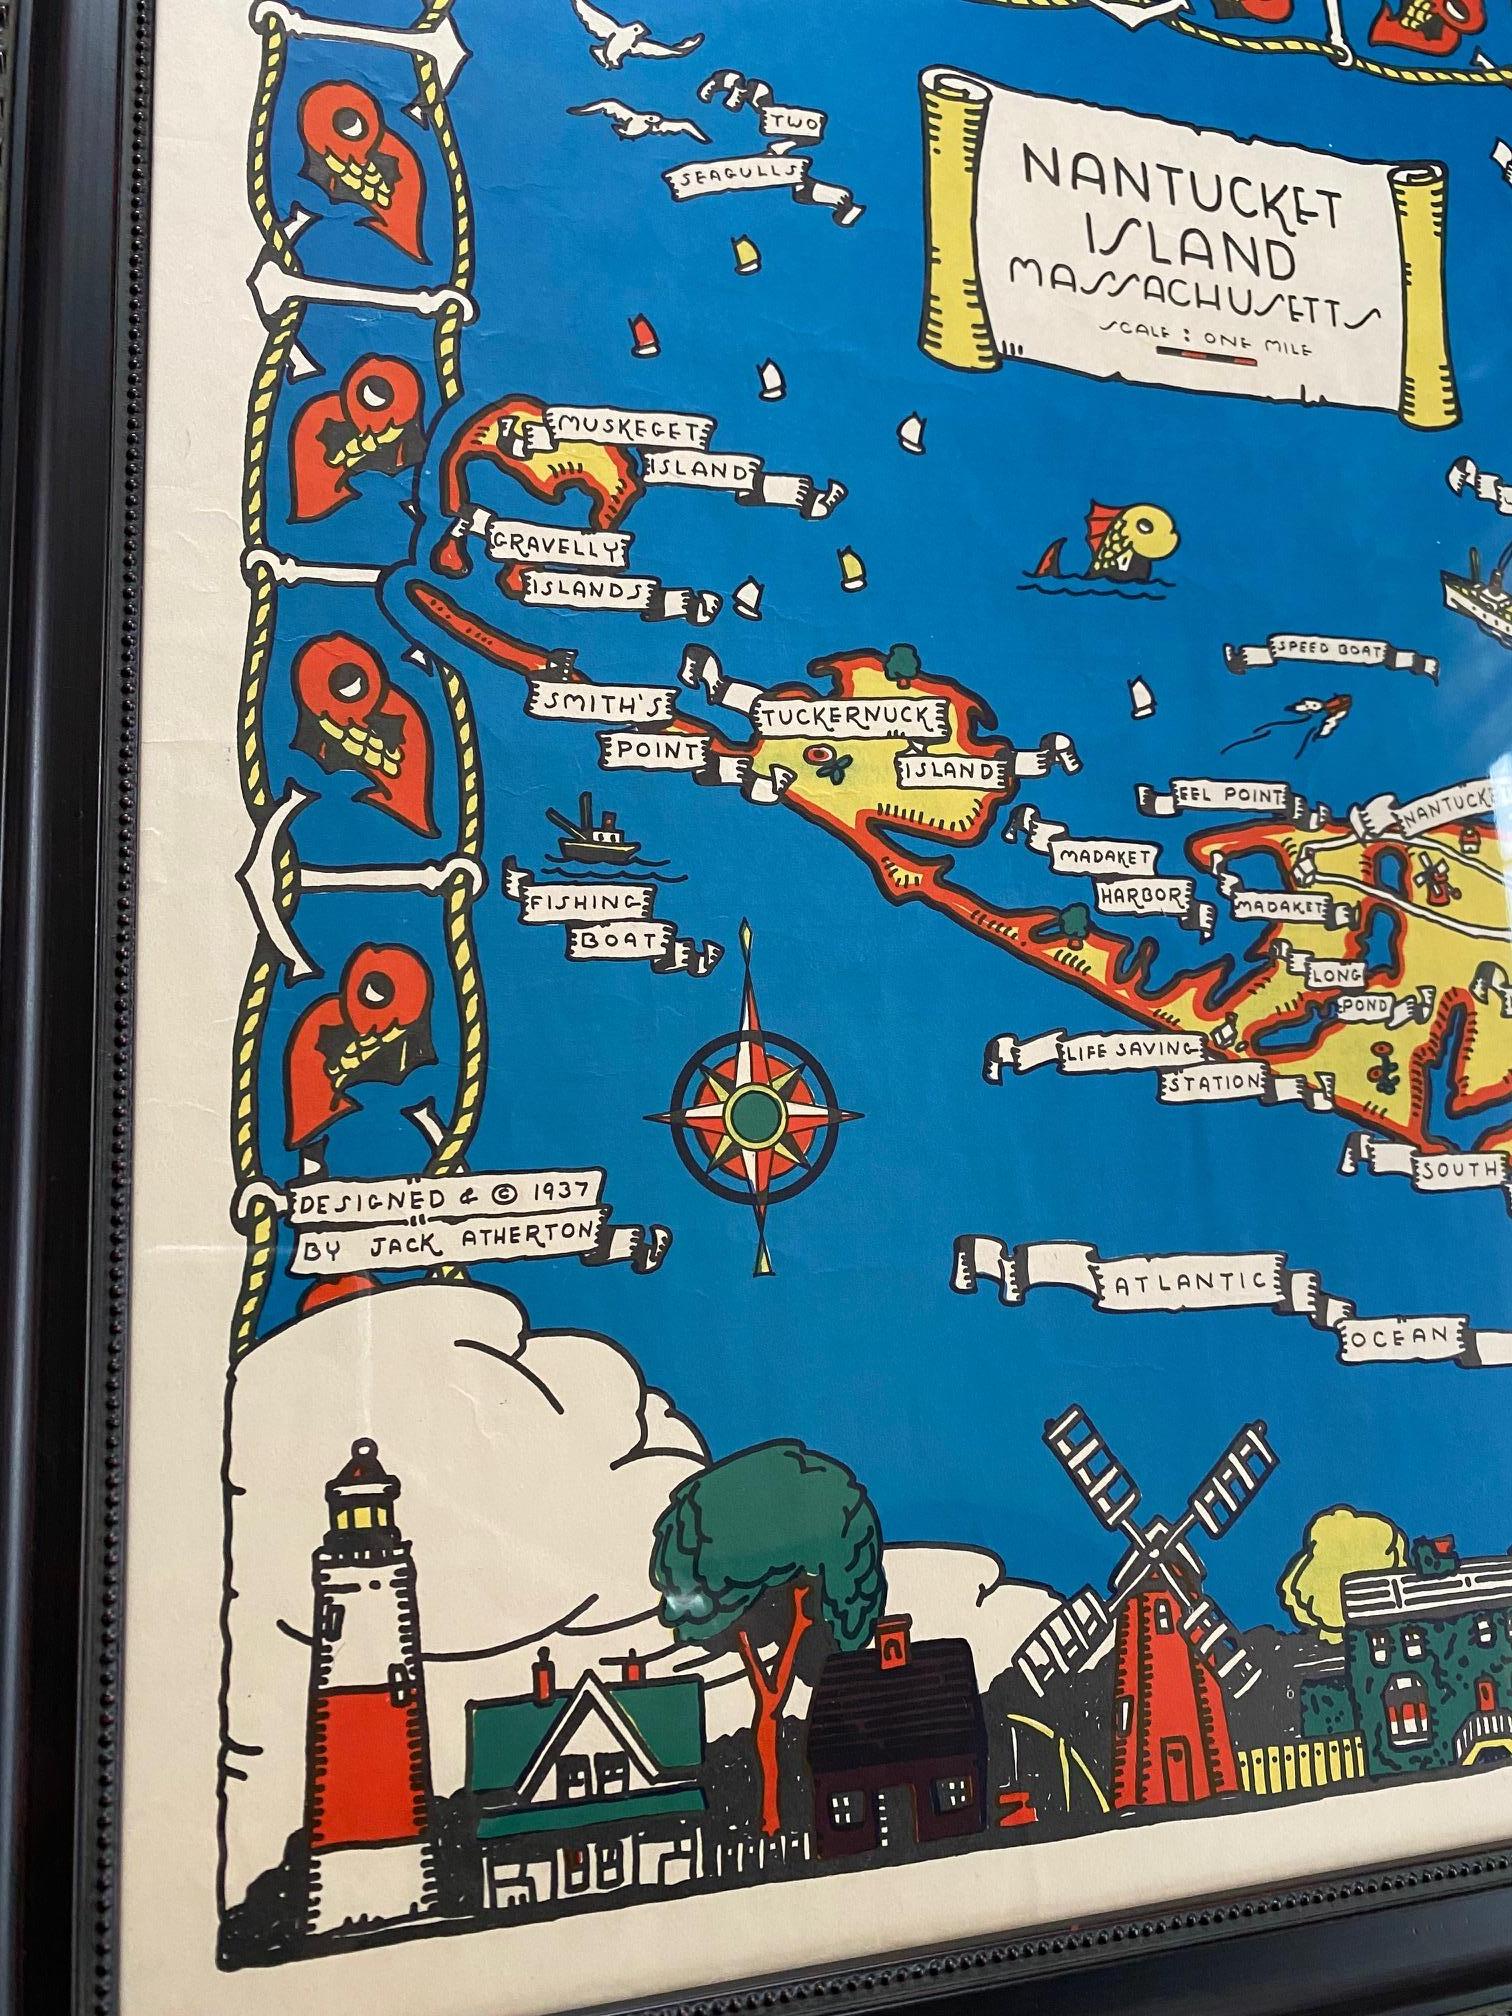 tourist map of nantucket island